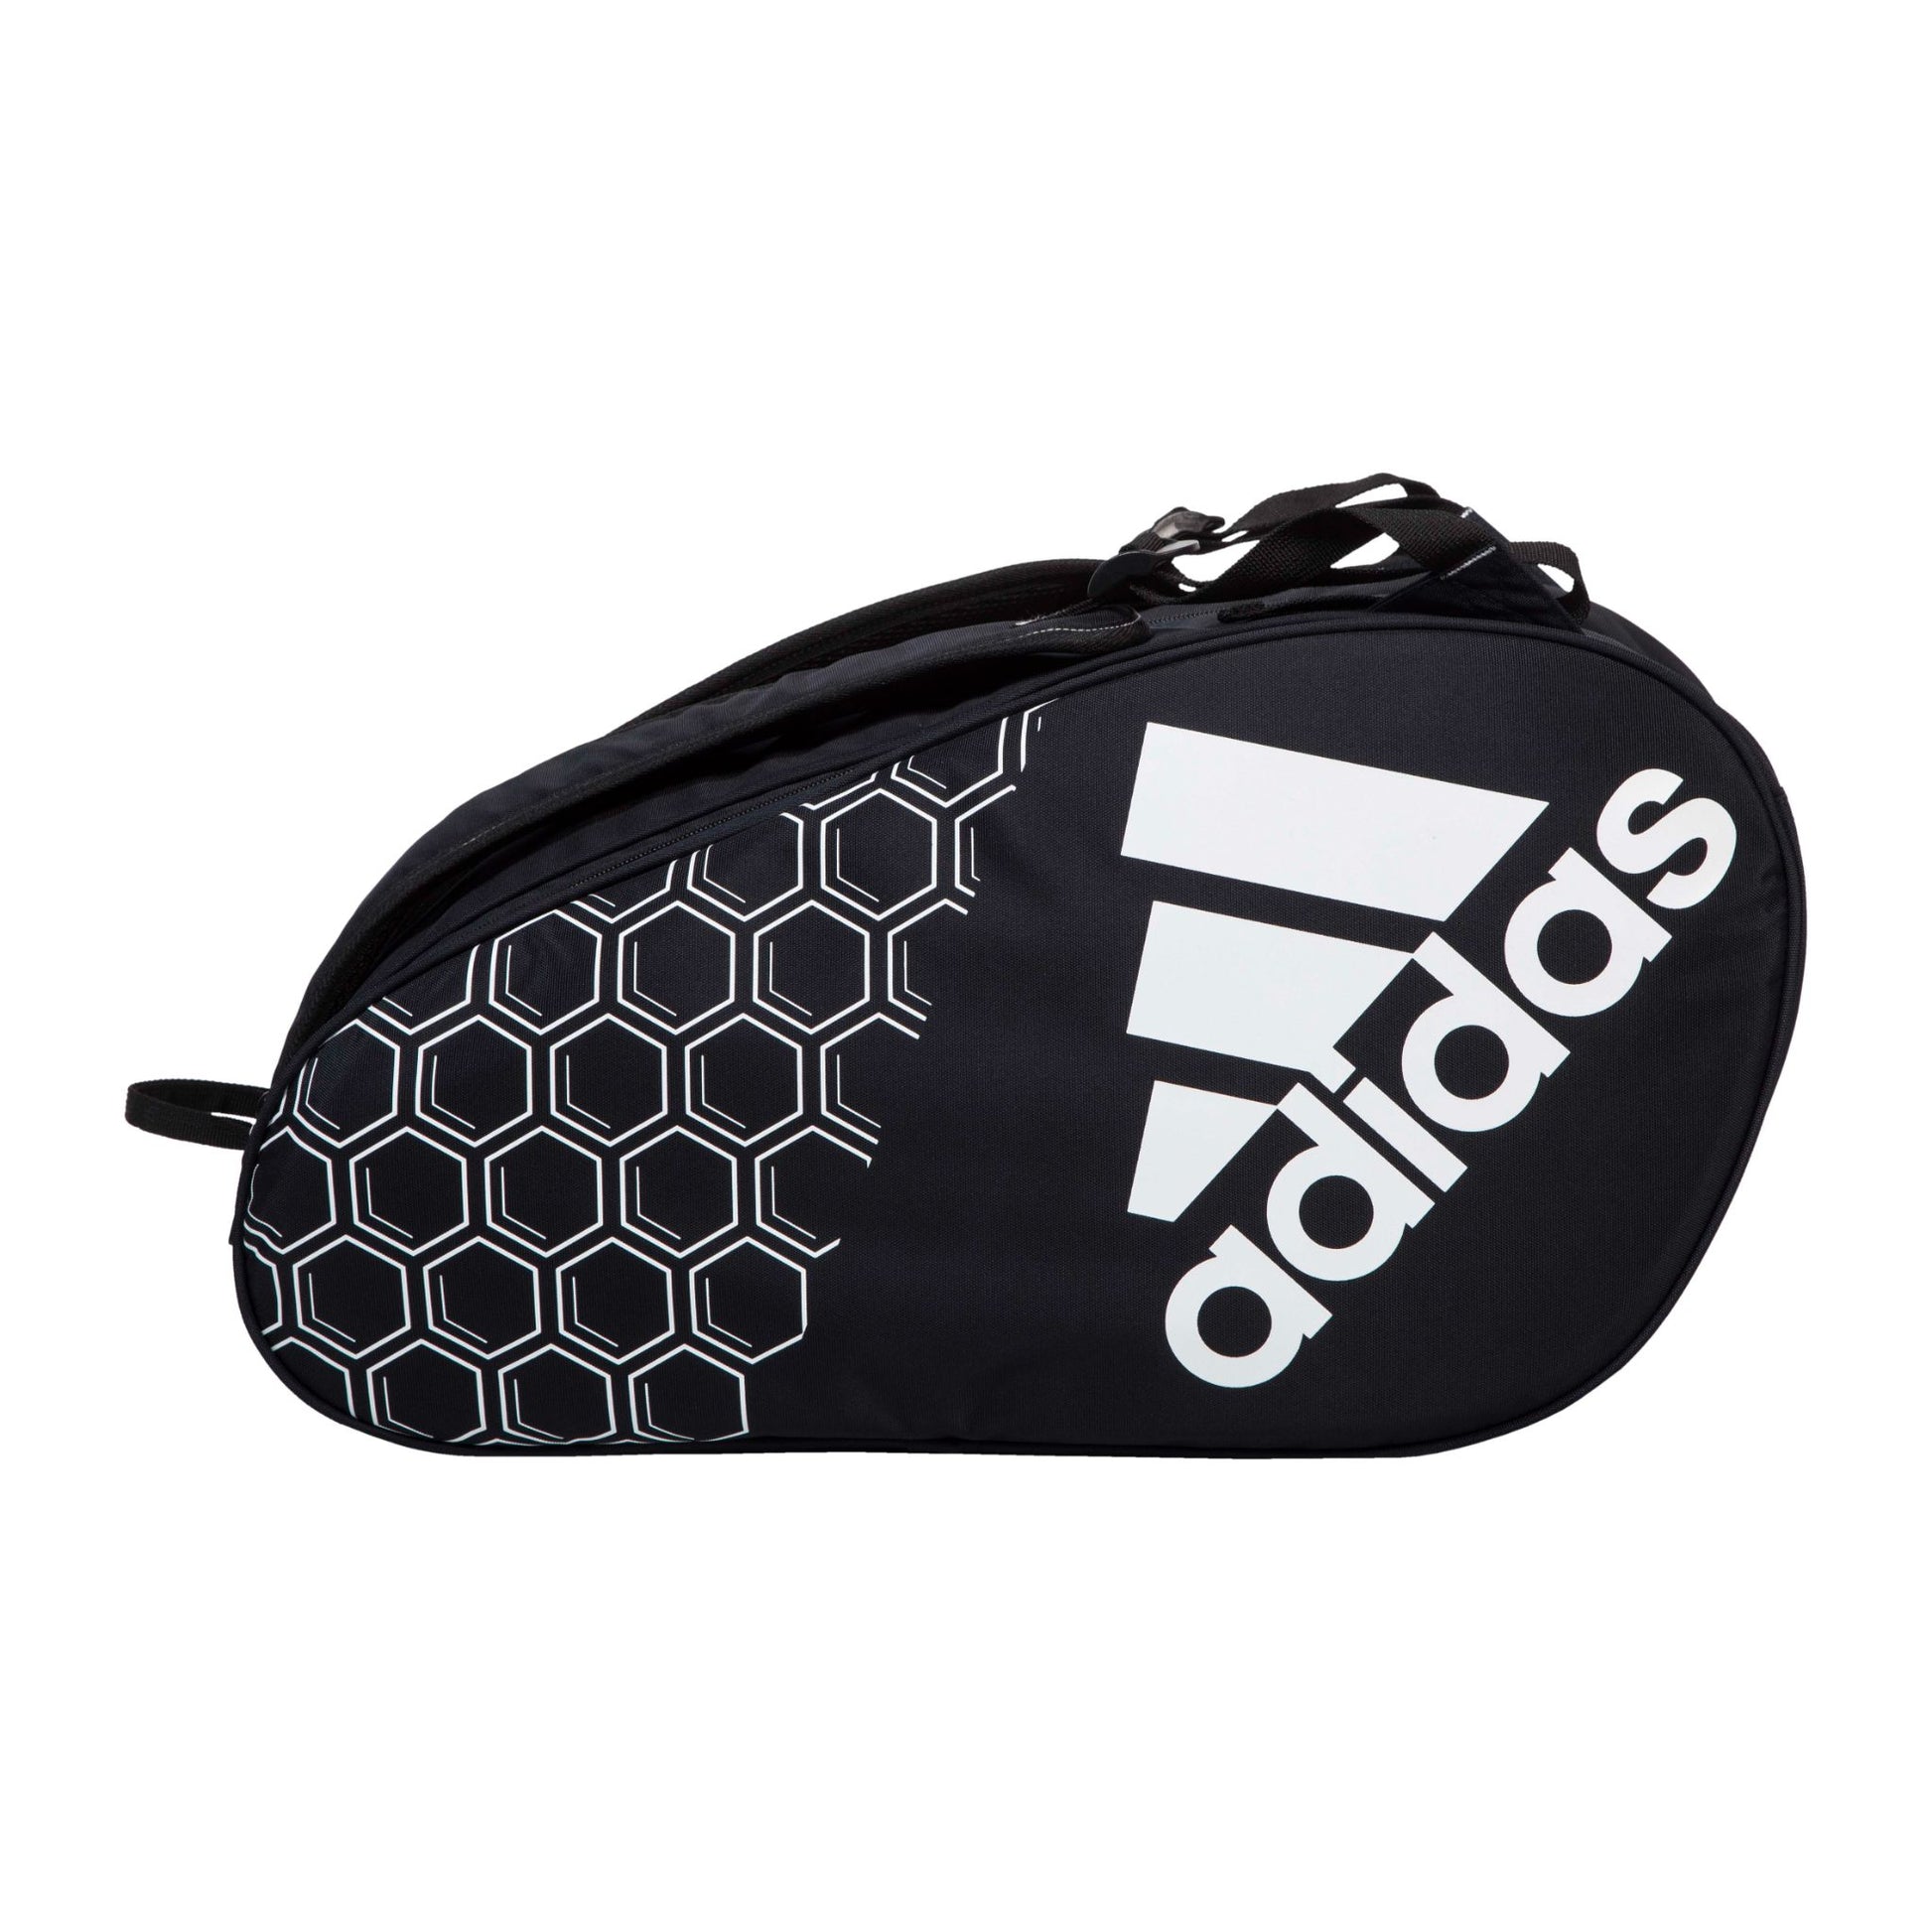 Adidas control 3.0 Racket Bag